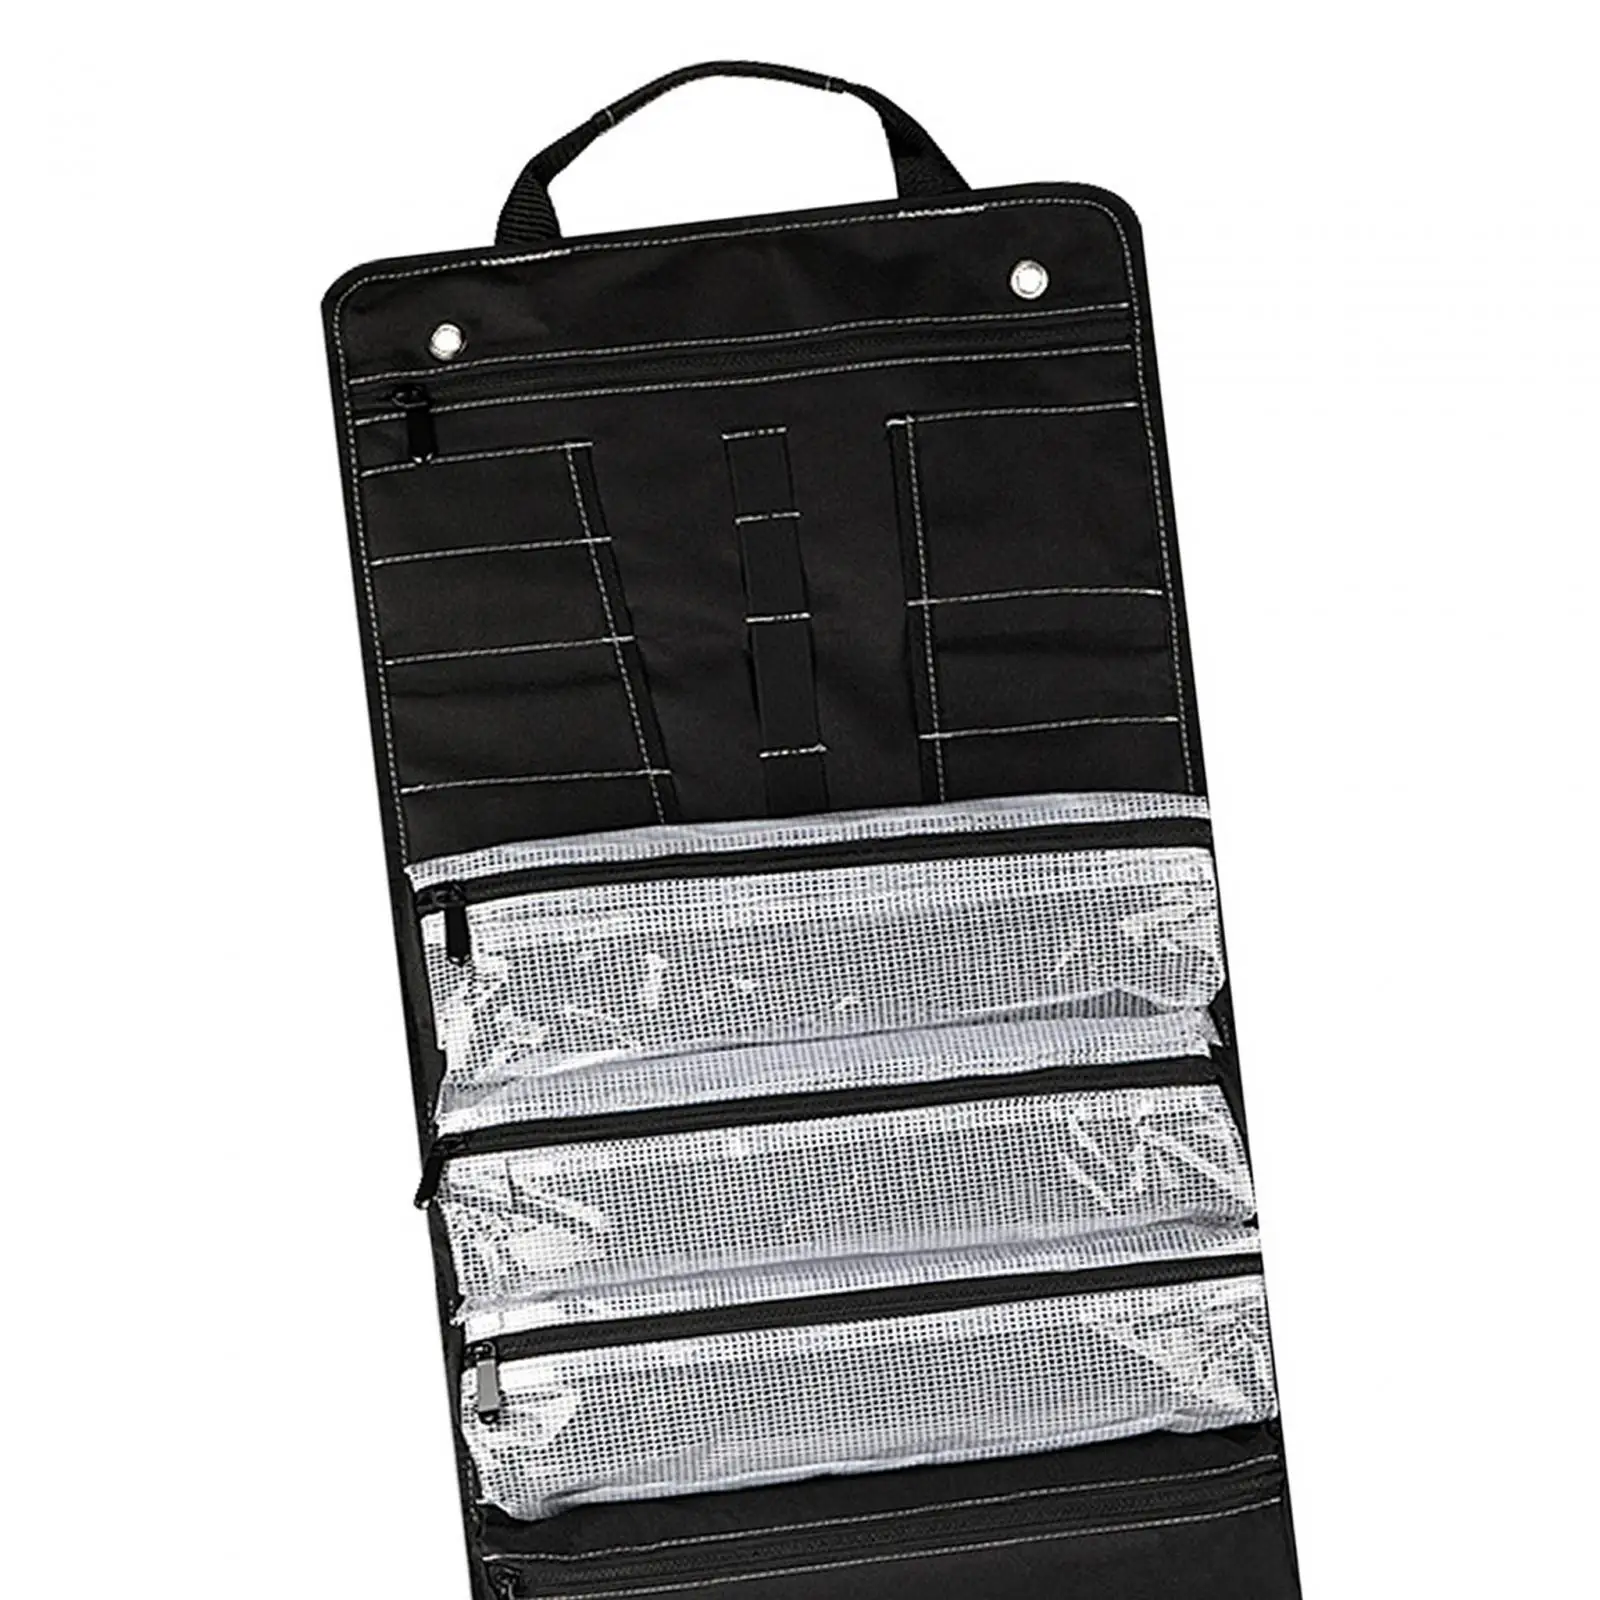 Roll up Tool Bag Folding Case Large Capacity Storage Versatile Lightweight Tote